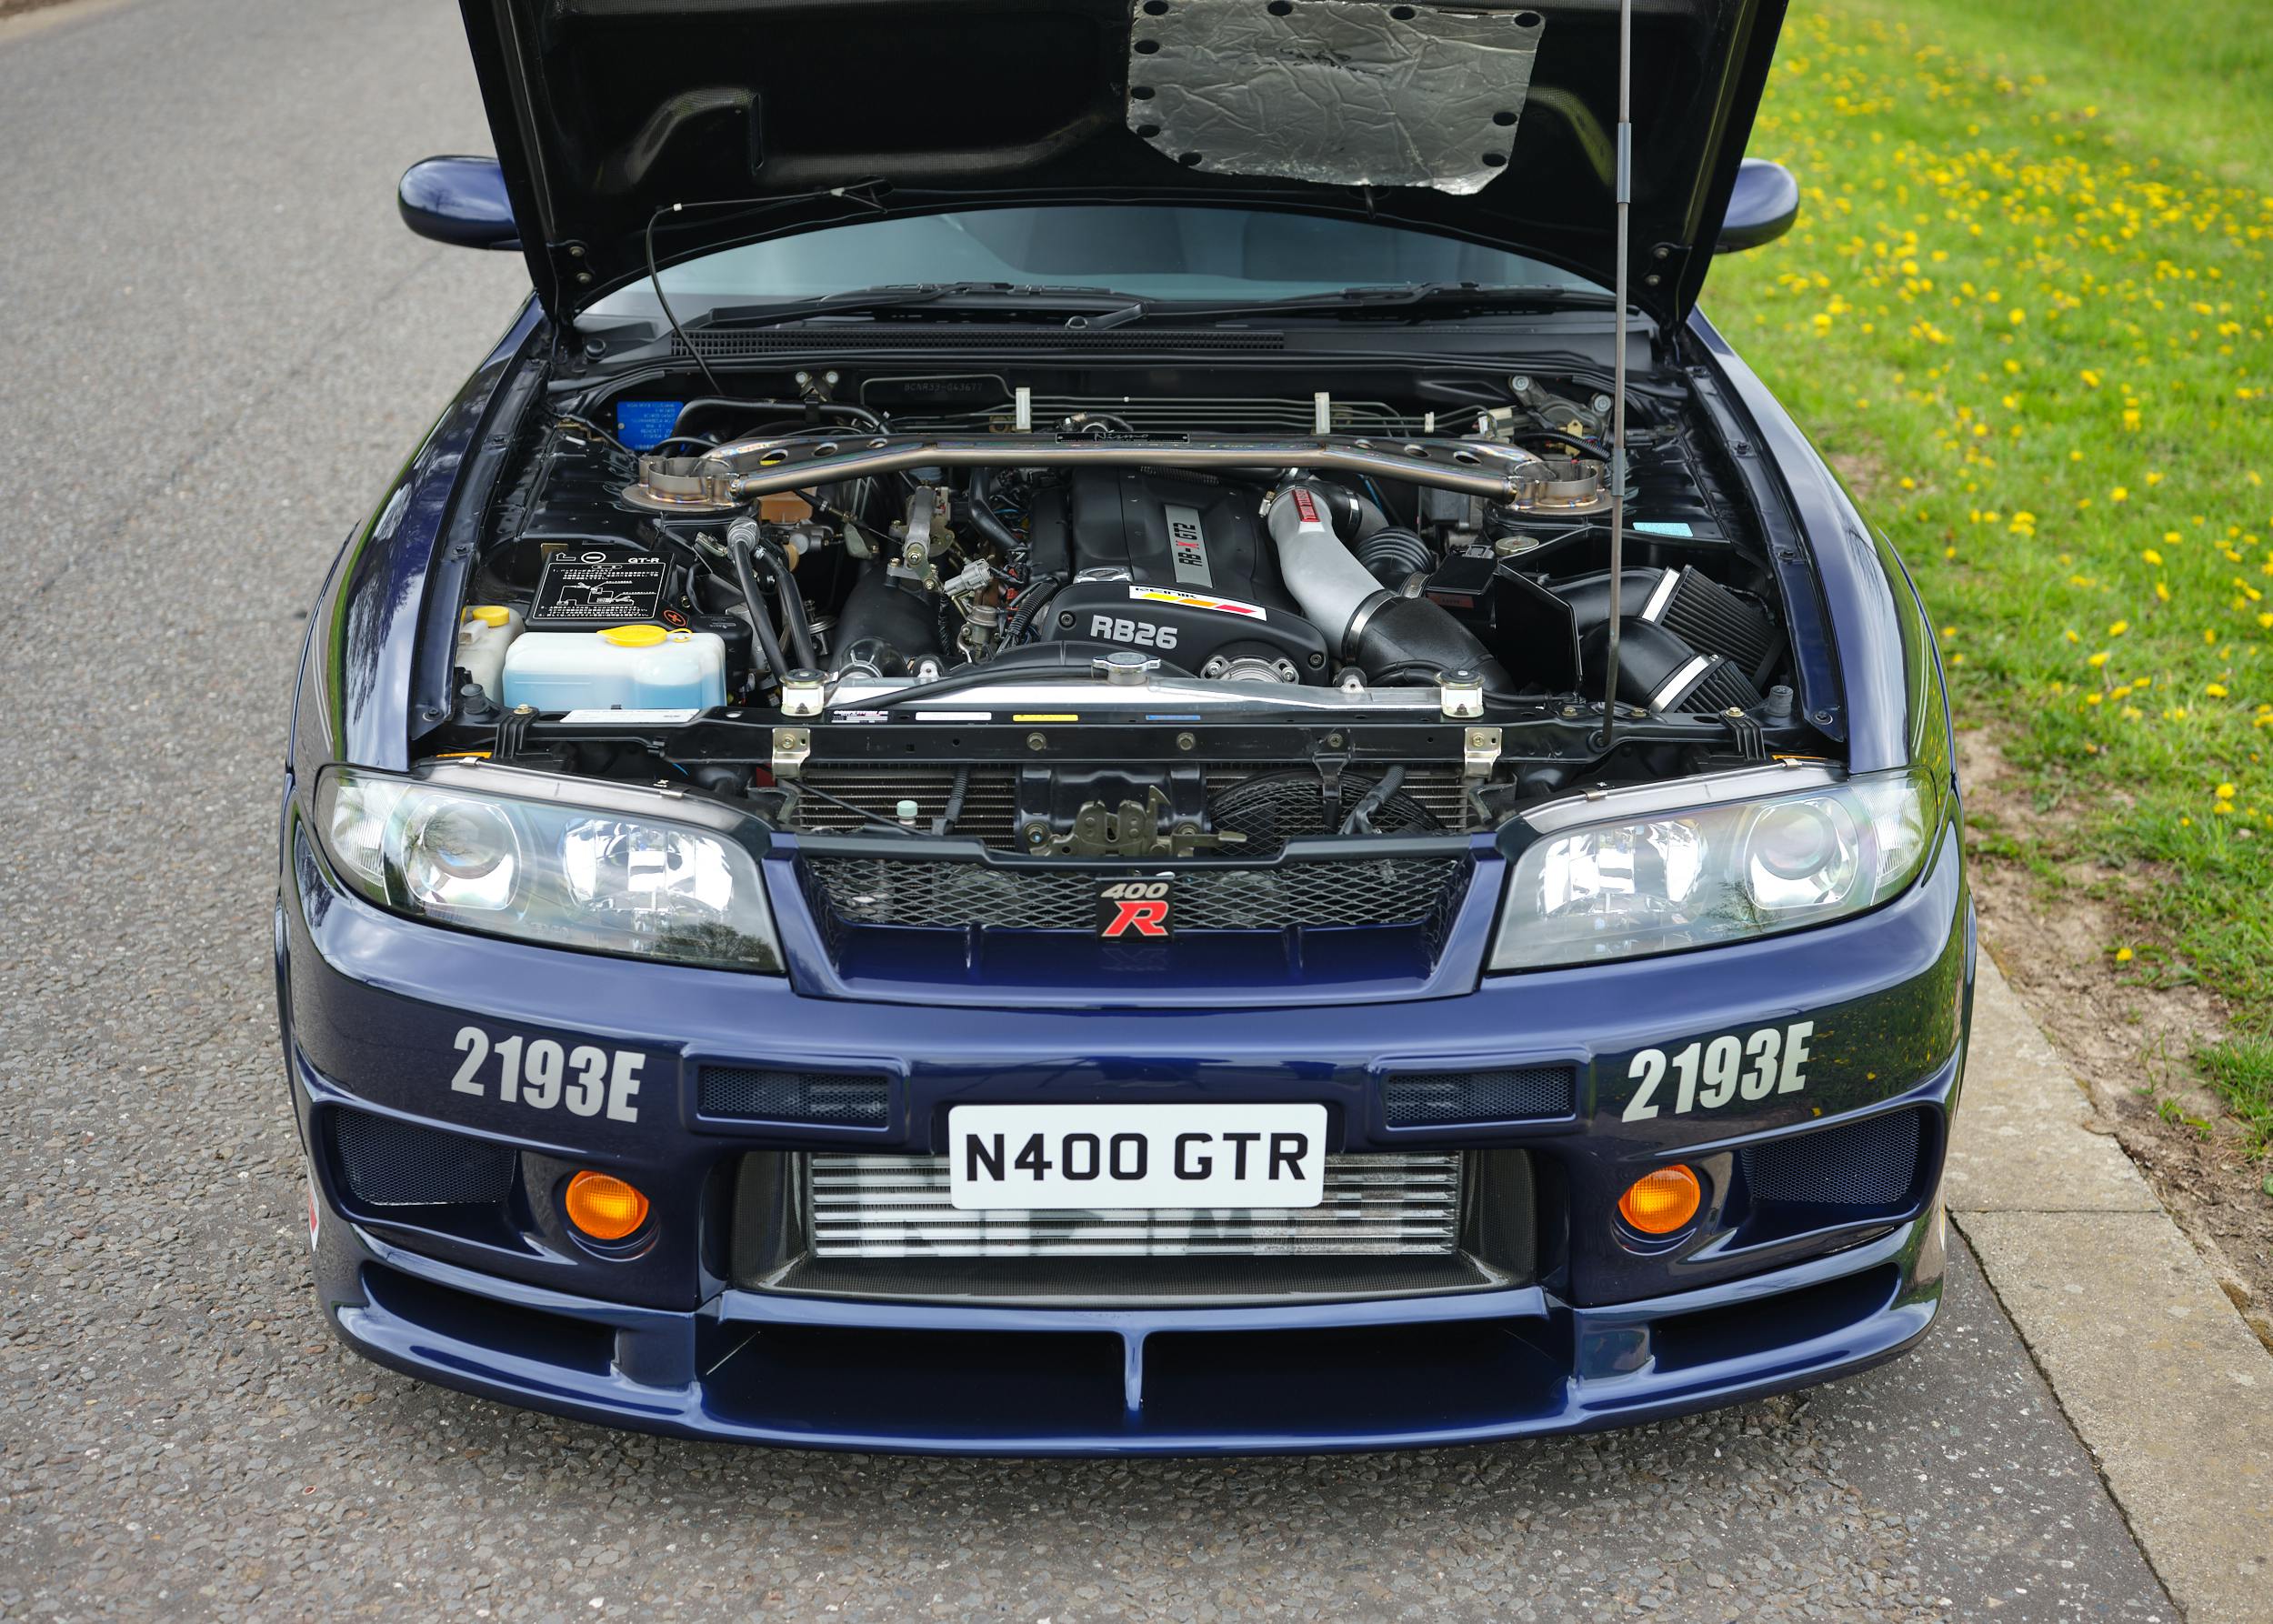 1996 Nissan Skyline R33 GT-R NISMO 400R engine bay front